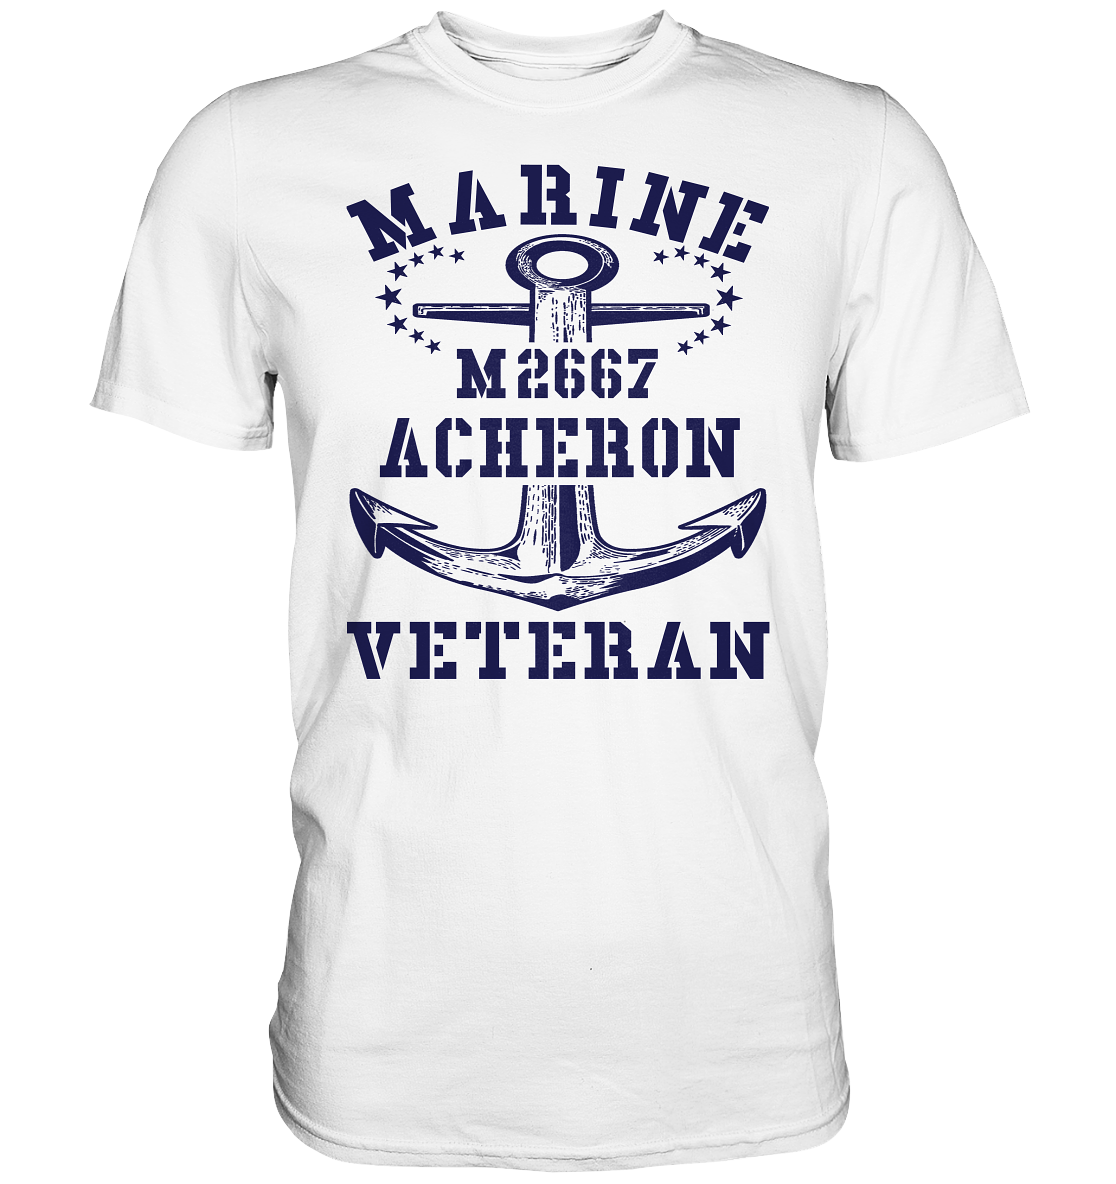 BiMi M2667 ACHERON Marine Veteran - Premium Shirt